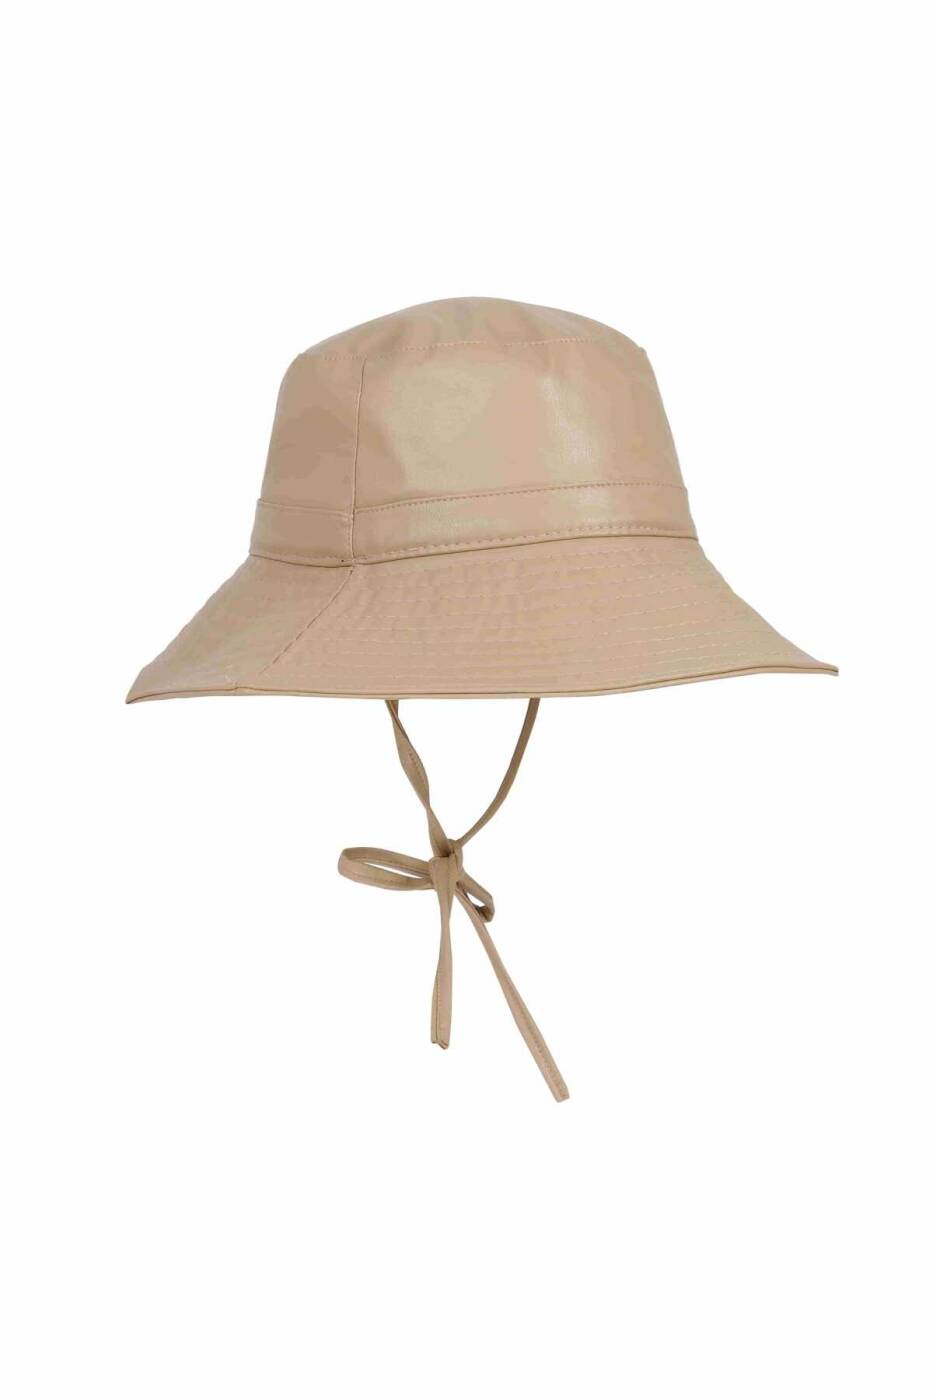  Bağlamalı Şapka Vizon - 2